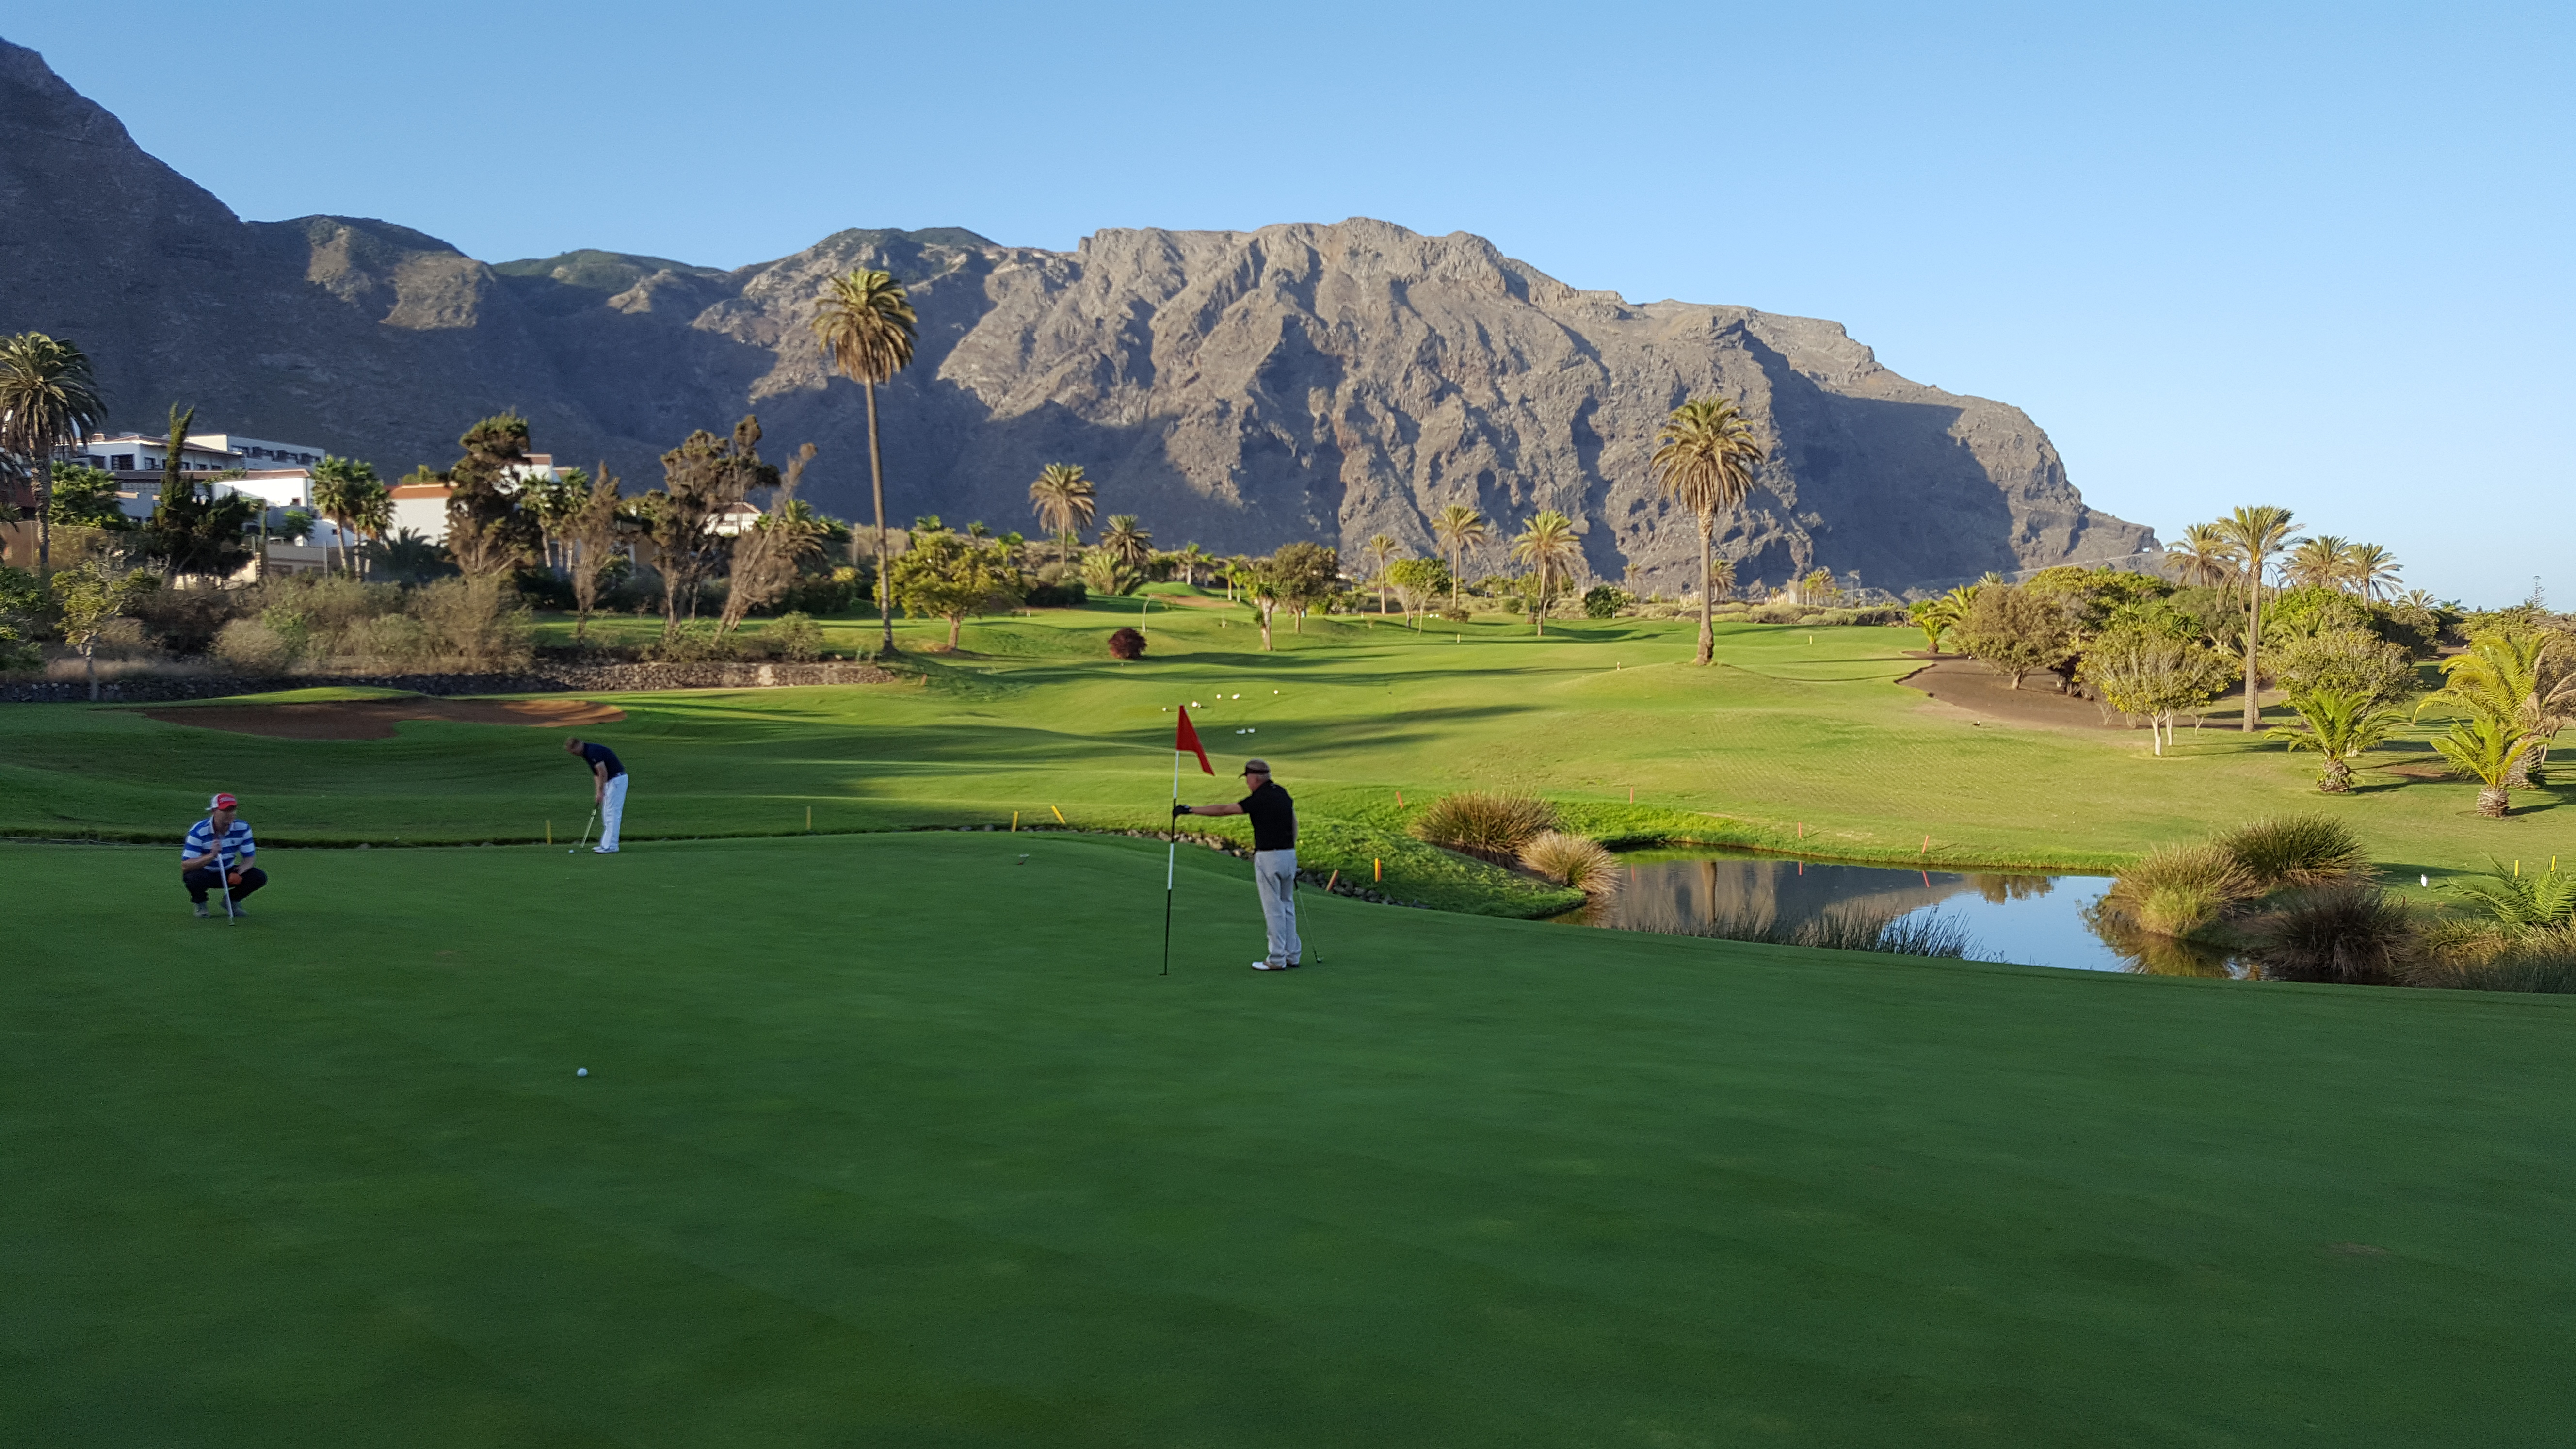 Buenavista Golf, Tenerife: course review